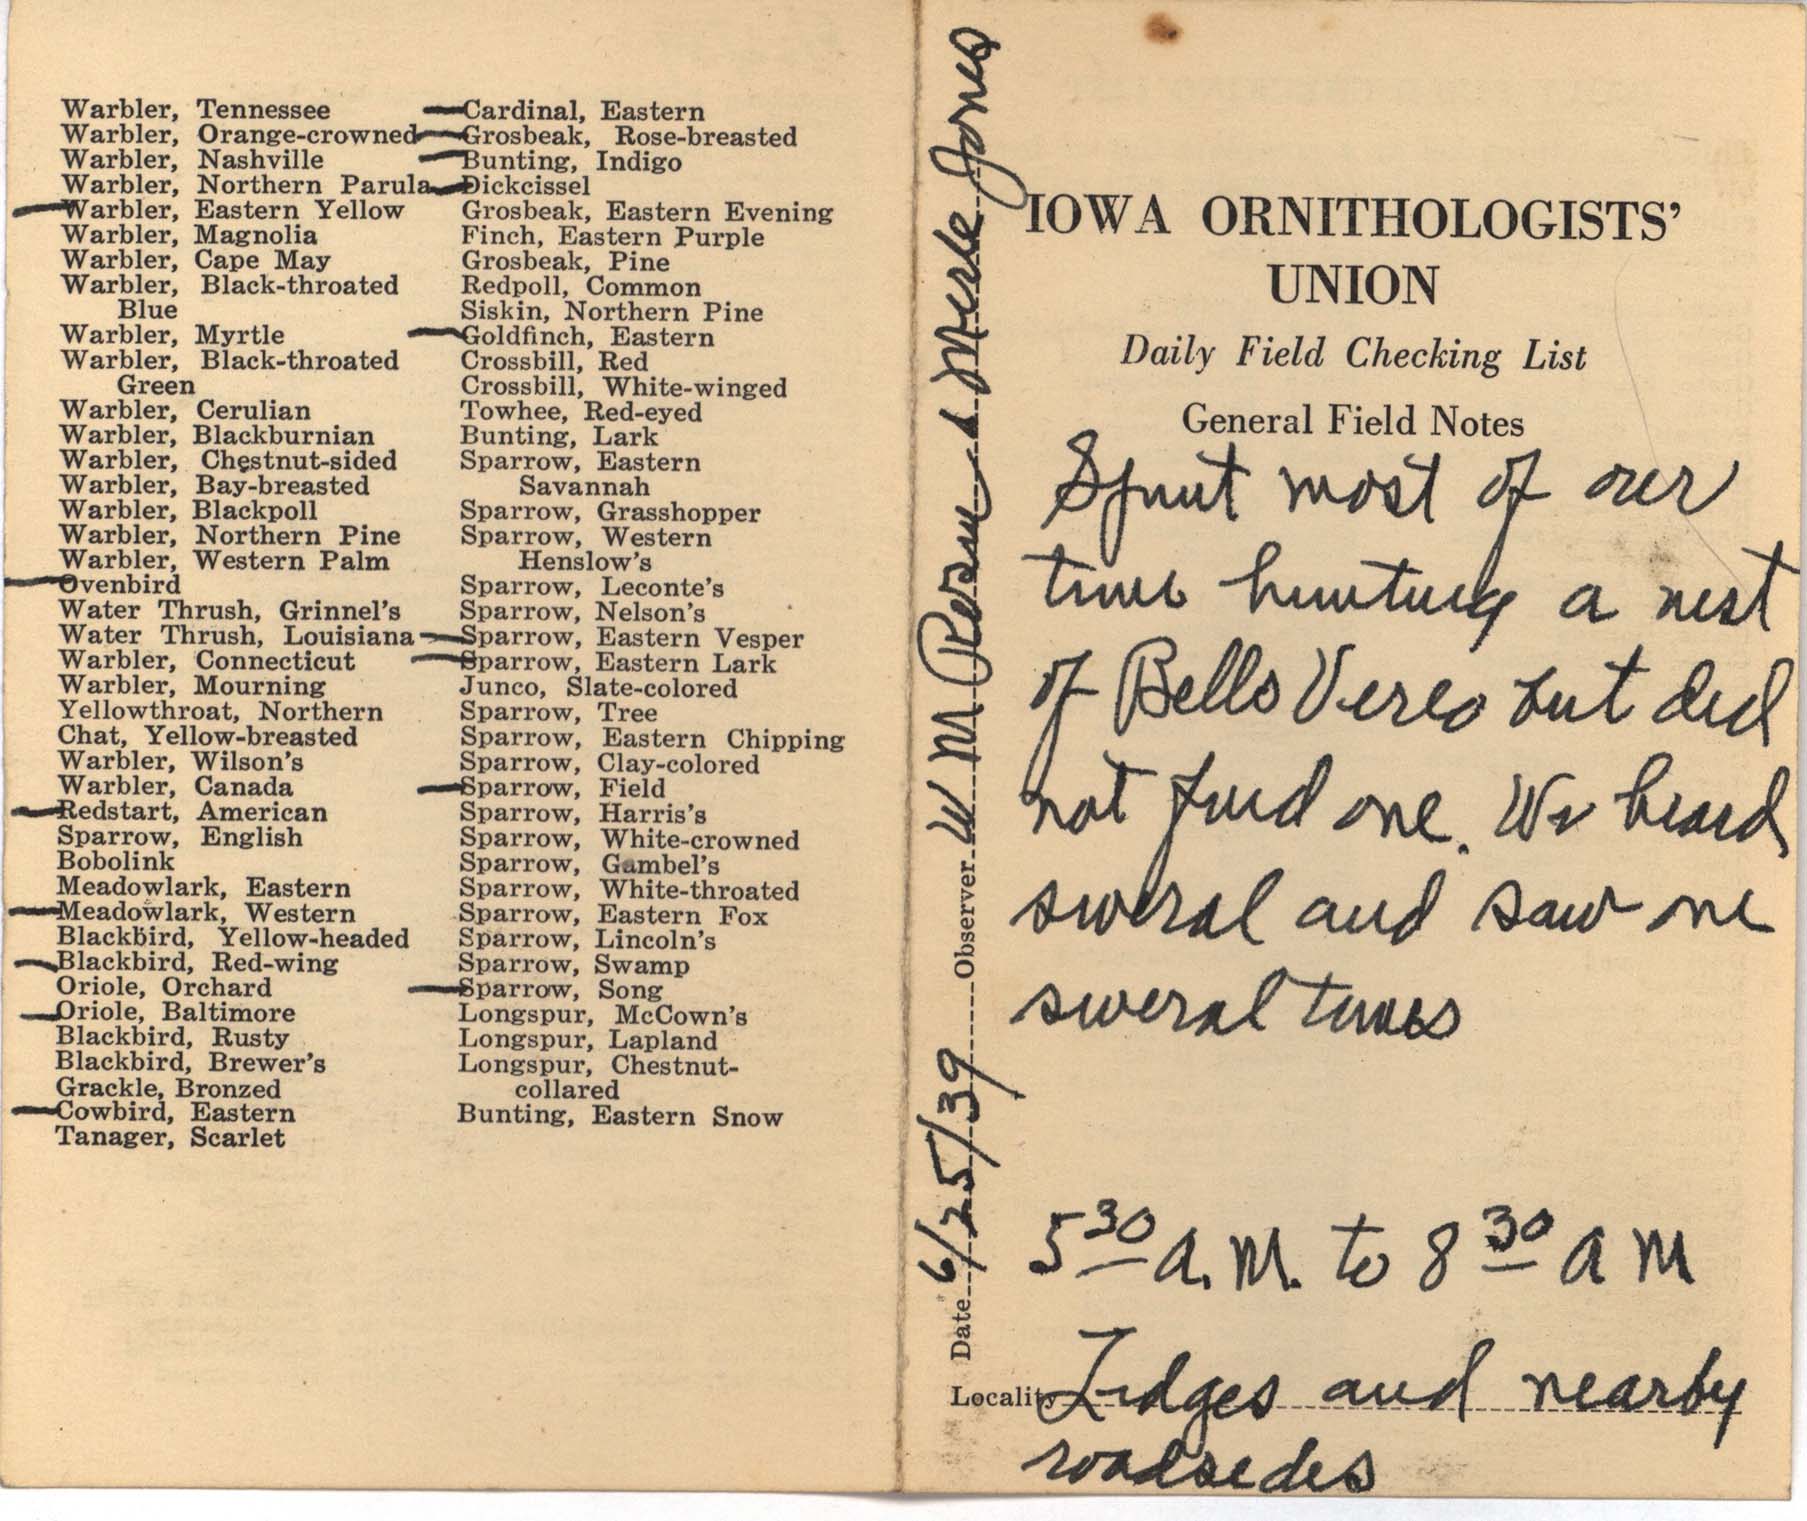 Daily field checking list by Walter Rosene, June 25, 1939